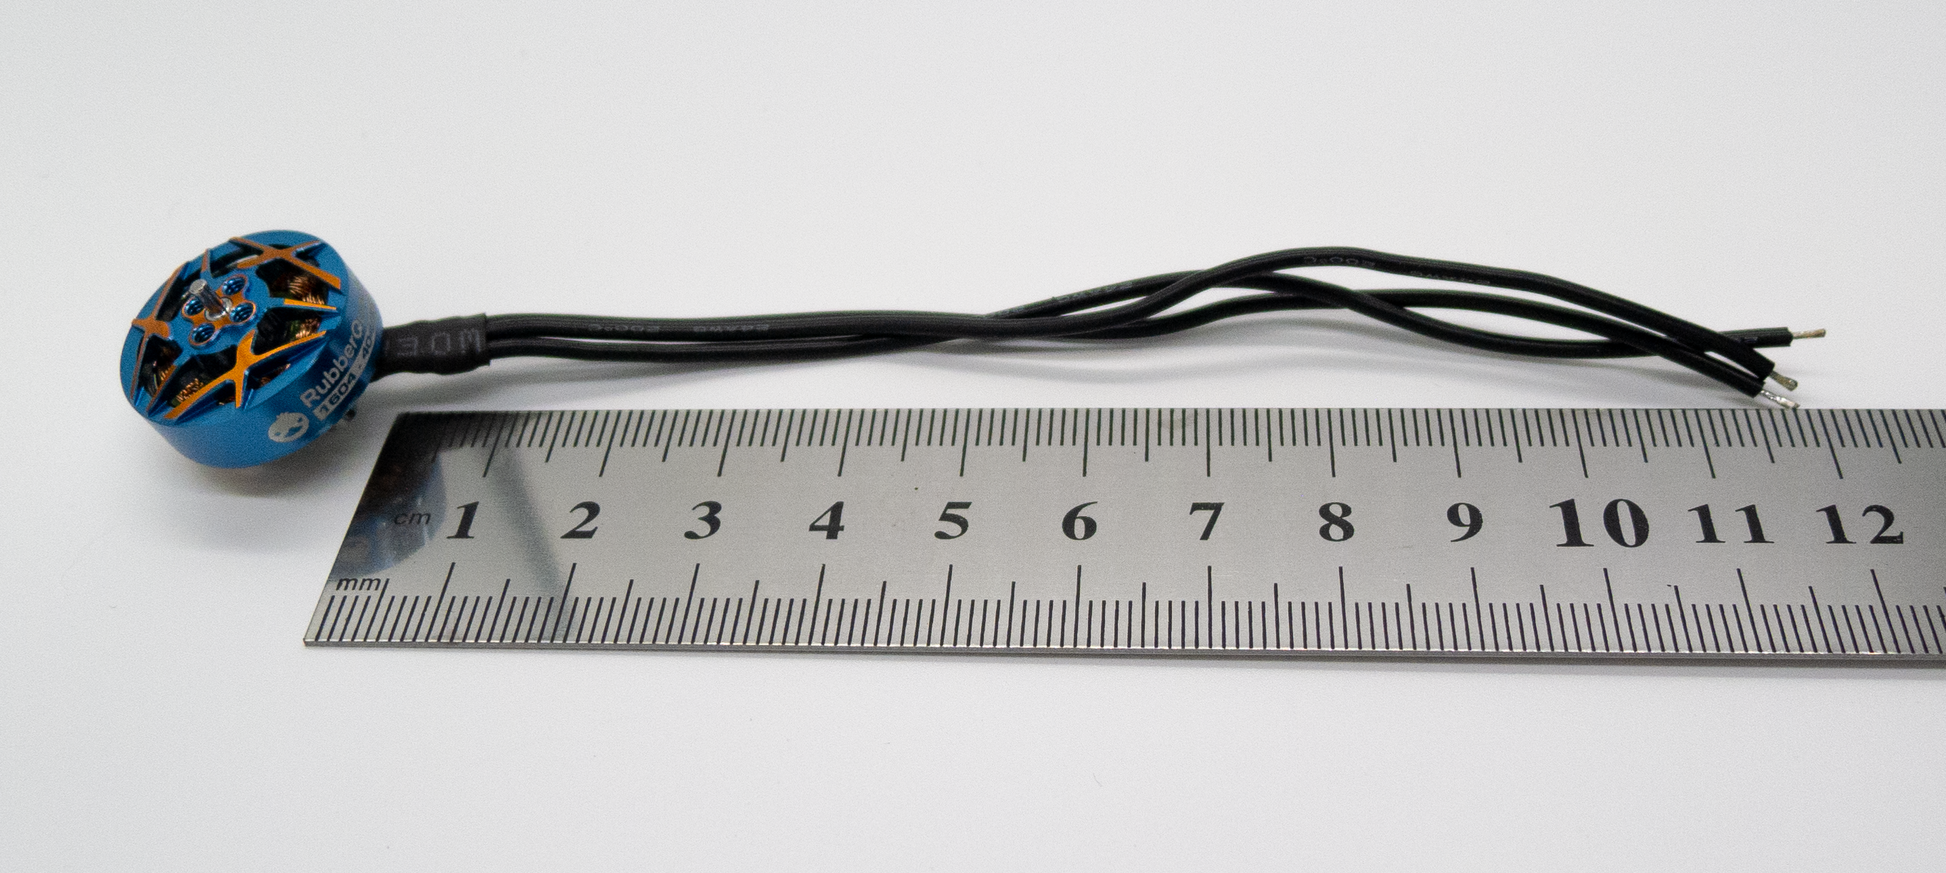 3 QuacK 5 motor cable length